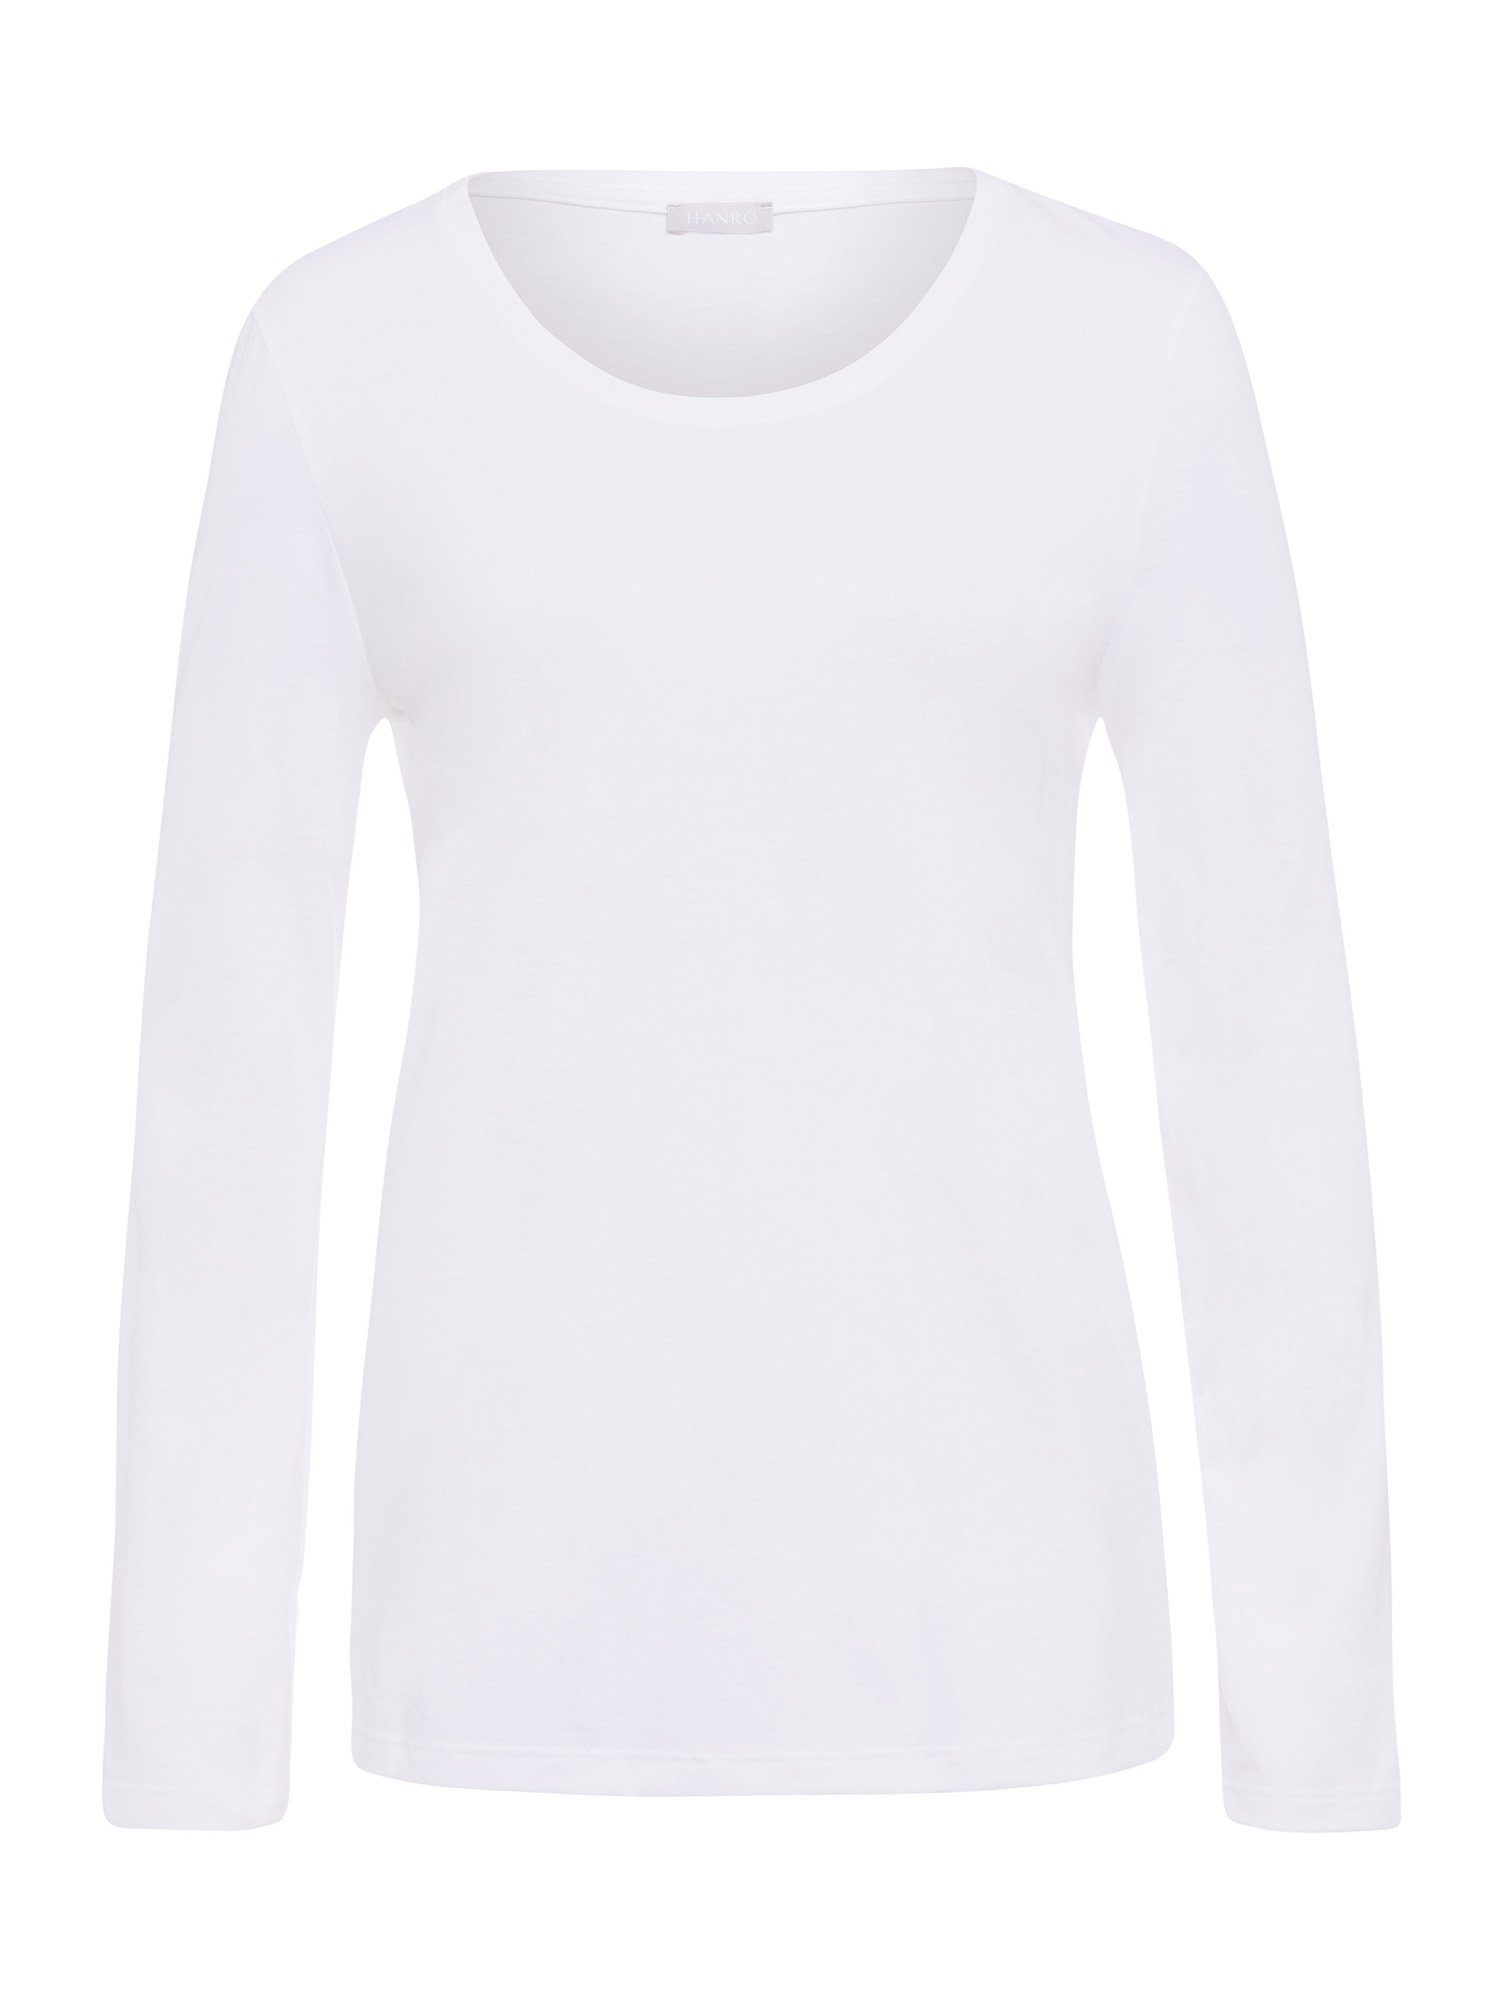 Hanro Pyjamaoberteil Sleep & Lounge unterhemd shirt langarm white